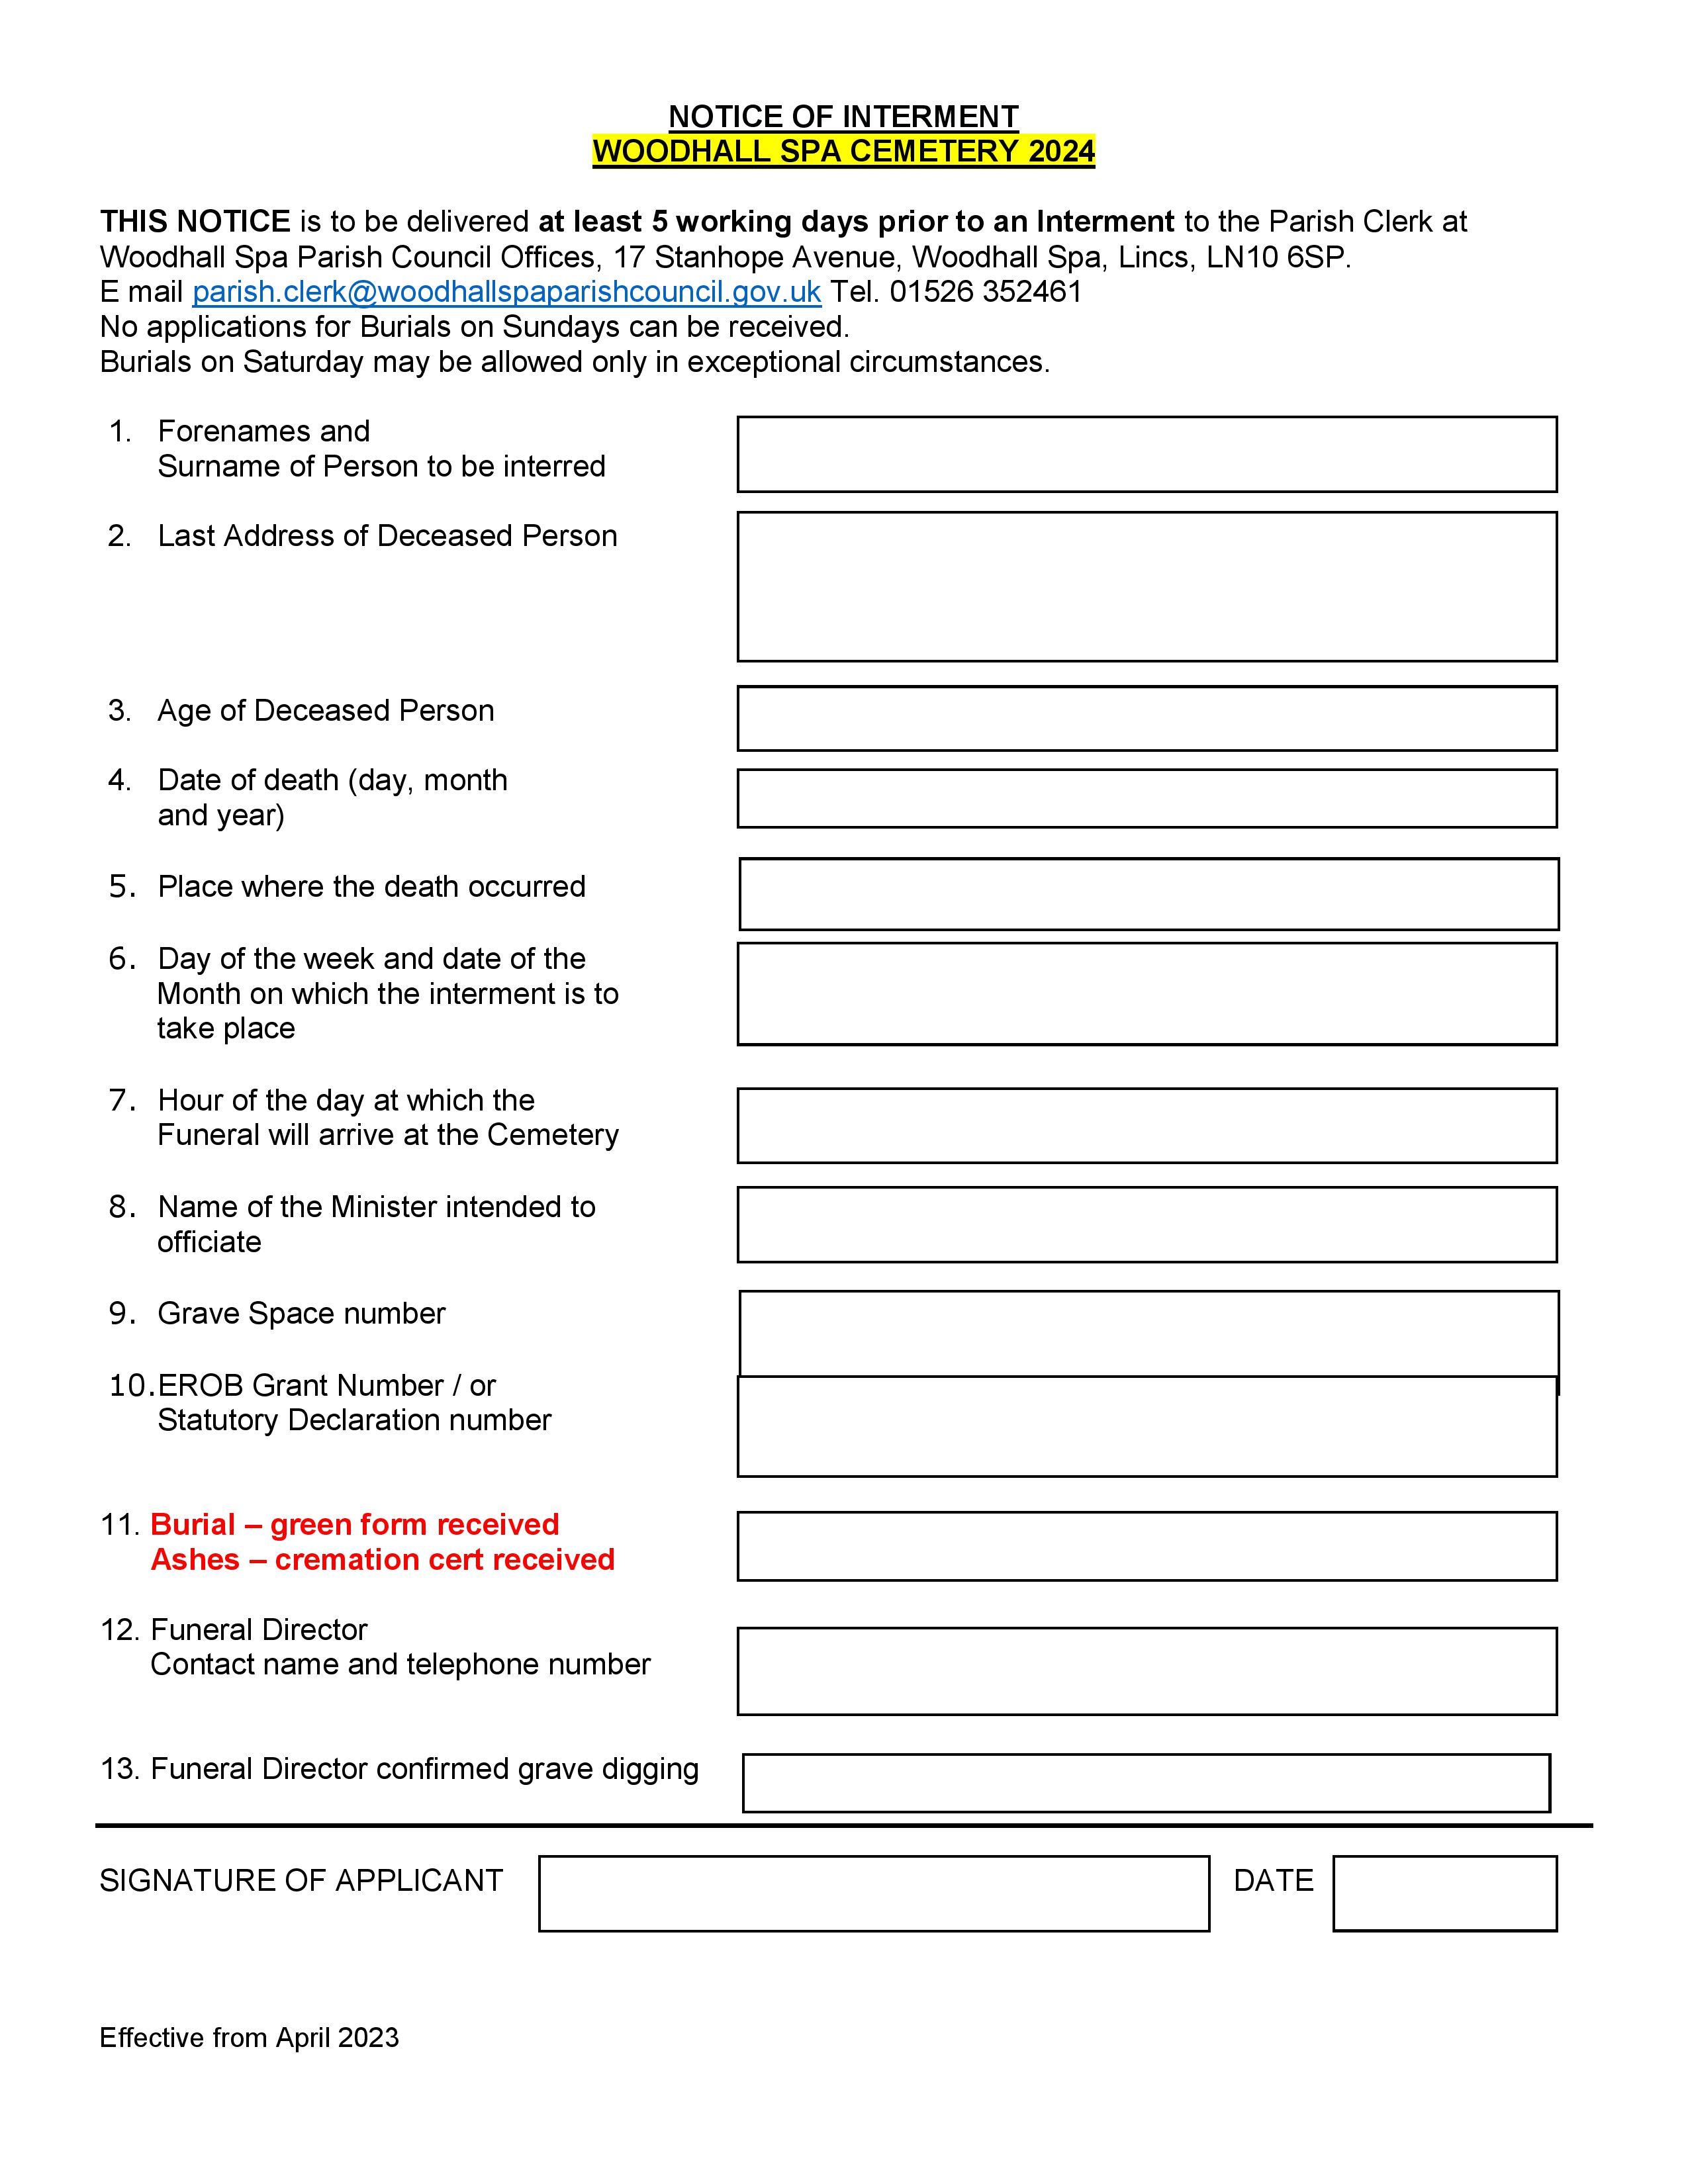 Notice of interment application form apr24